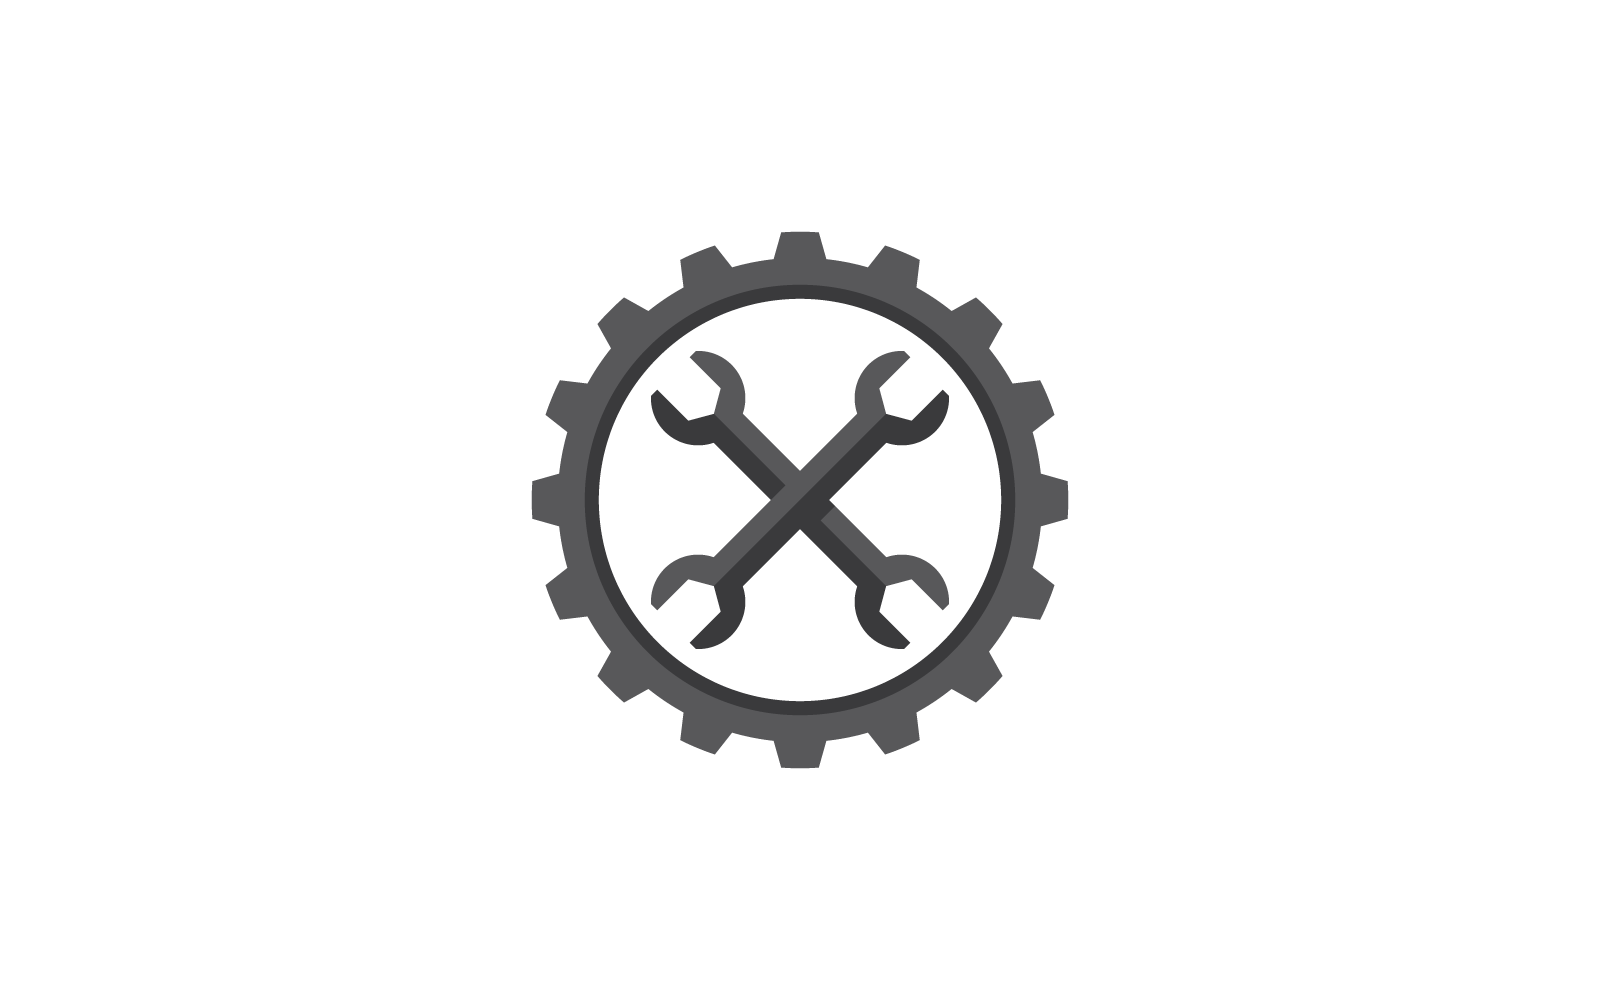 Wrench logo illustration icon vector flat design